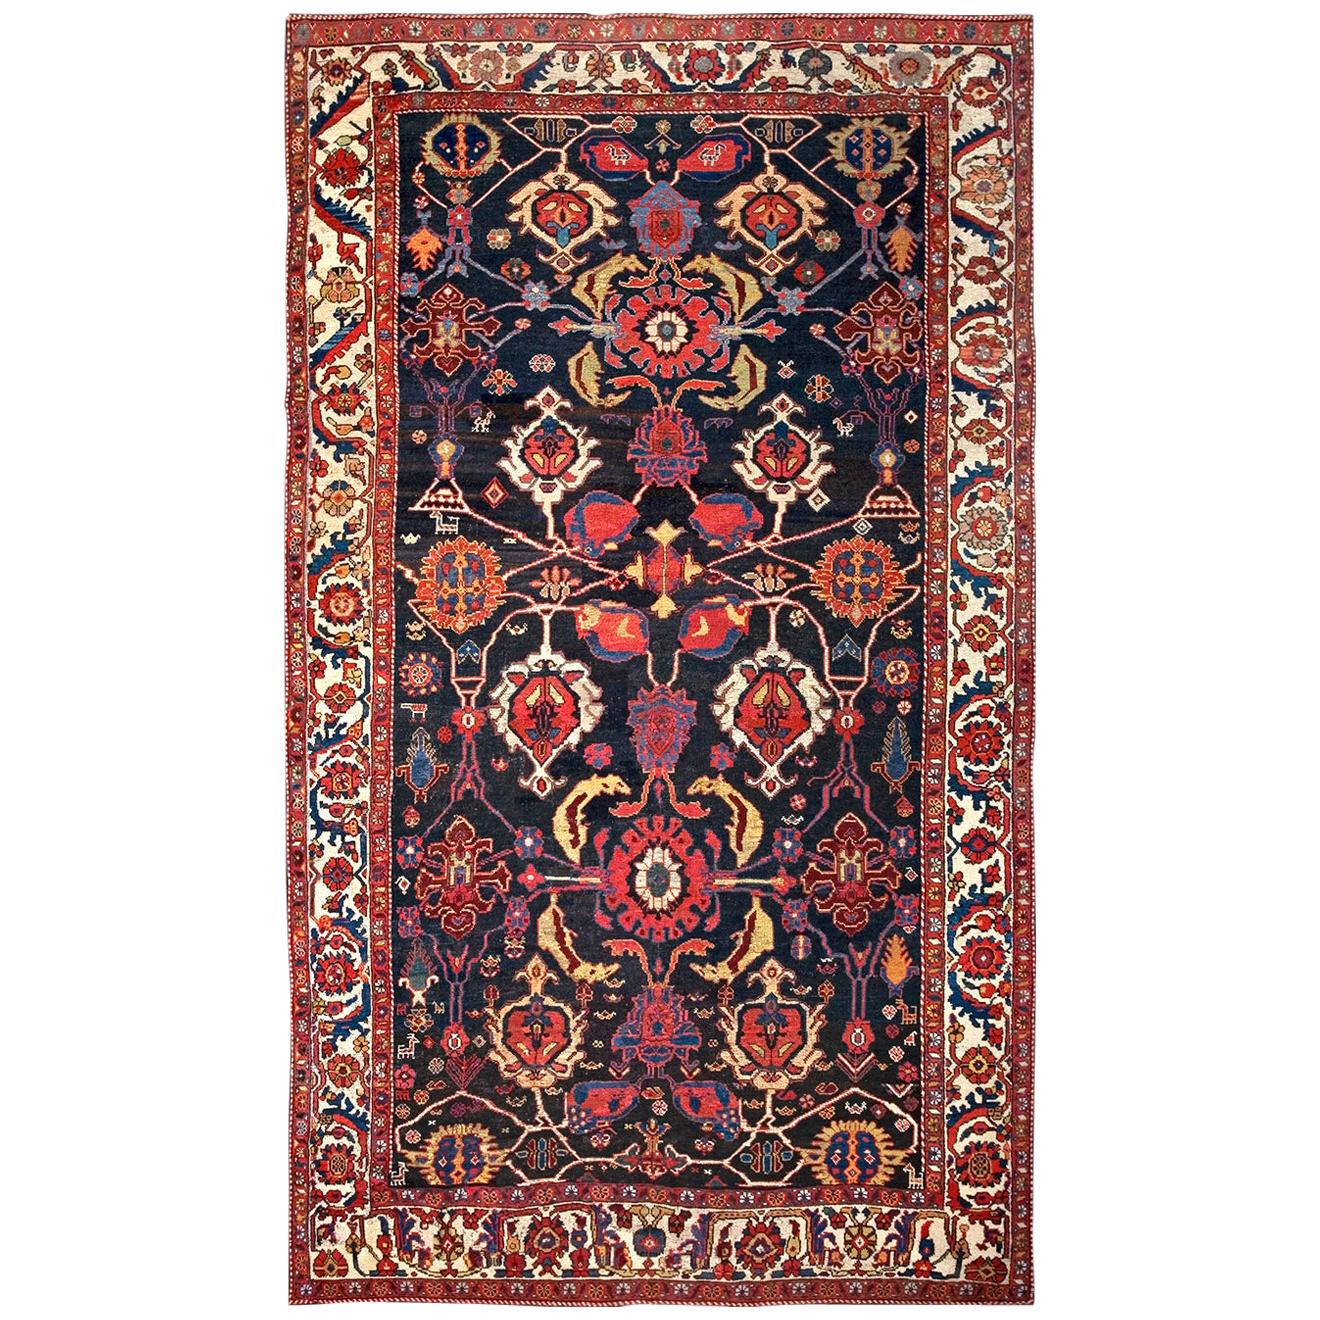 Late 19th Century Persian Bakhtiari Carpet ( 6'6" x 10'9" - 198 x 327 cm ) For Sale